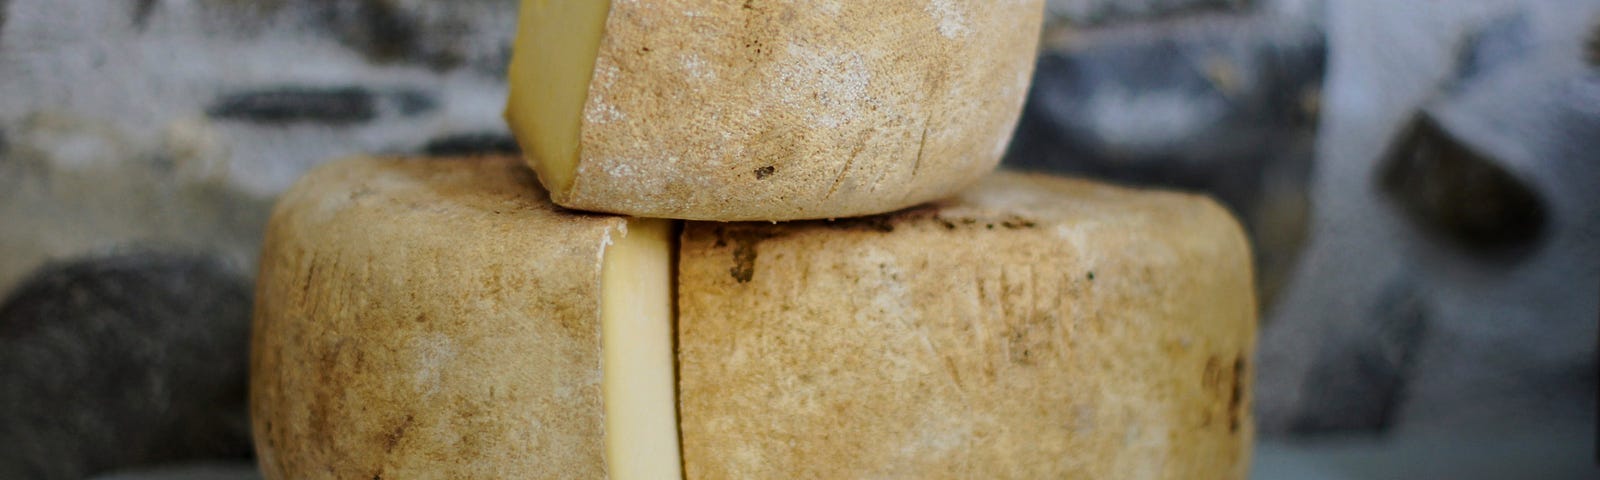 Cheese wheel cut into chunks